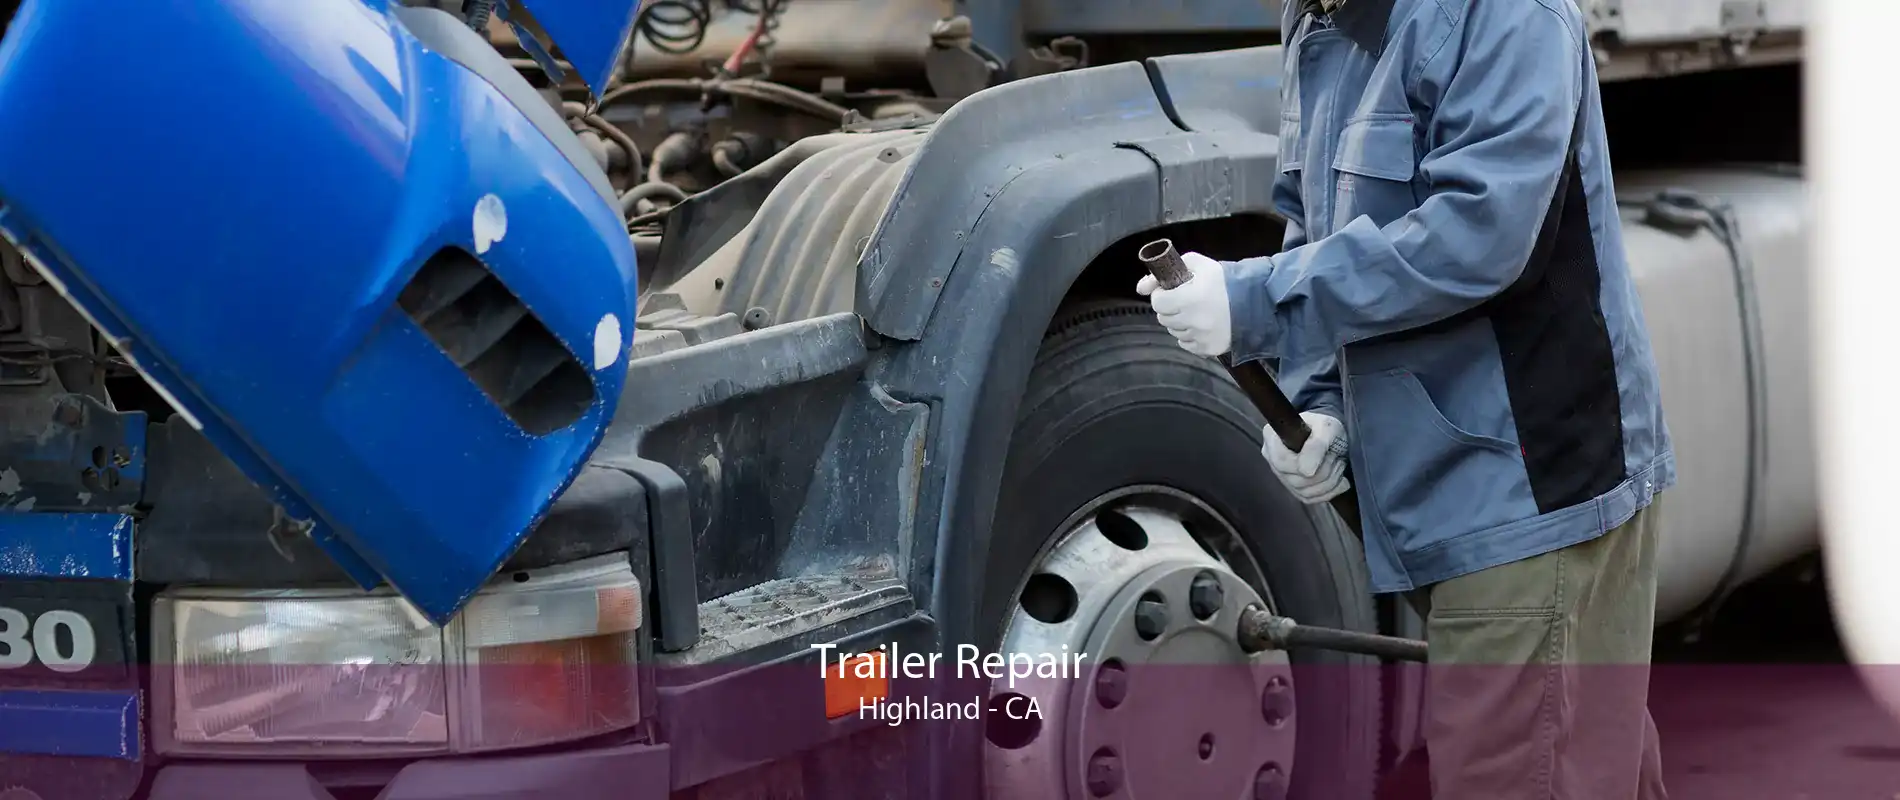 Trailer Repair Highland - CA